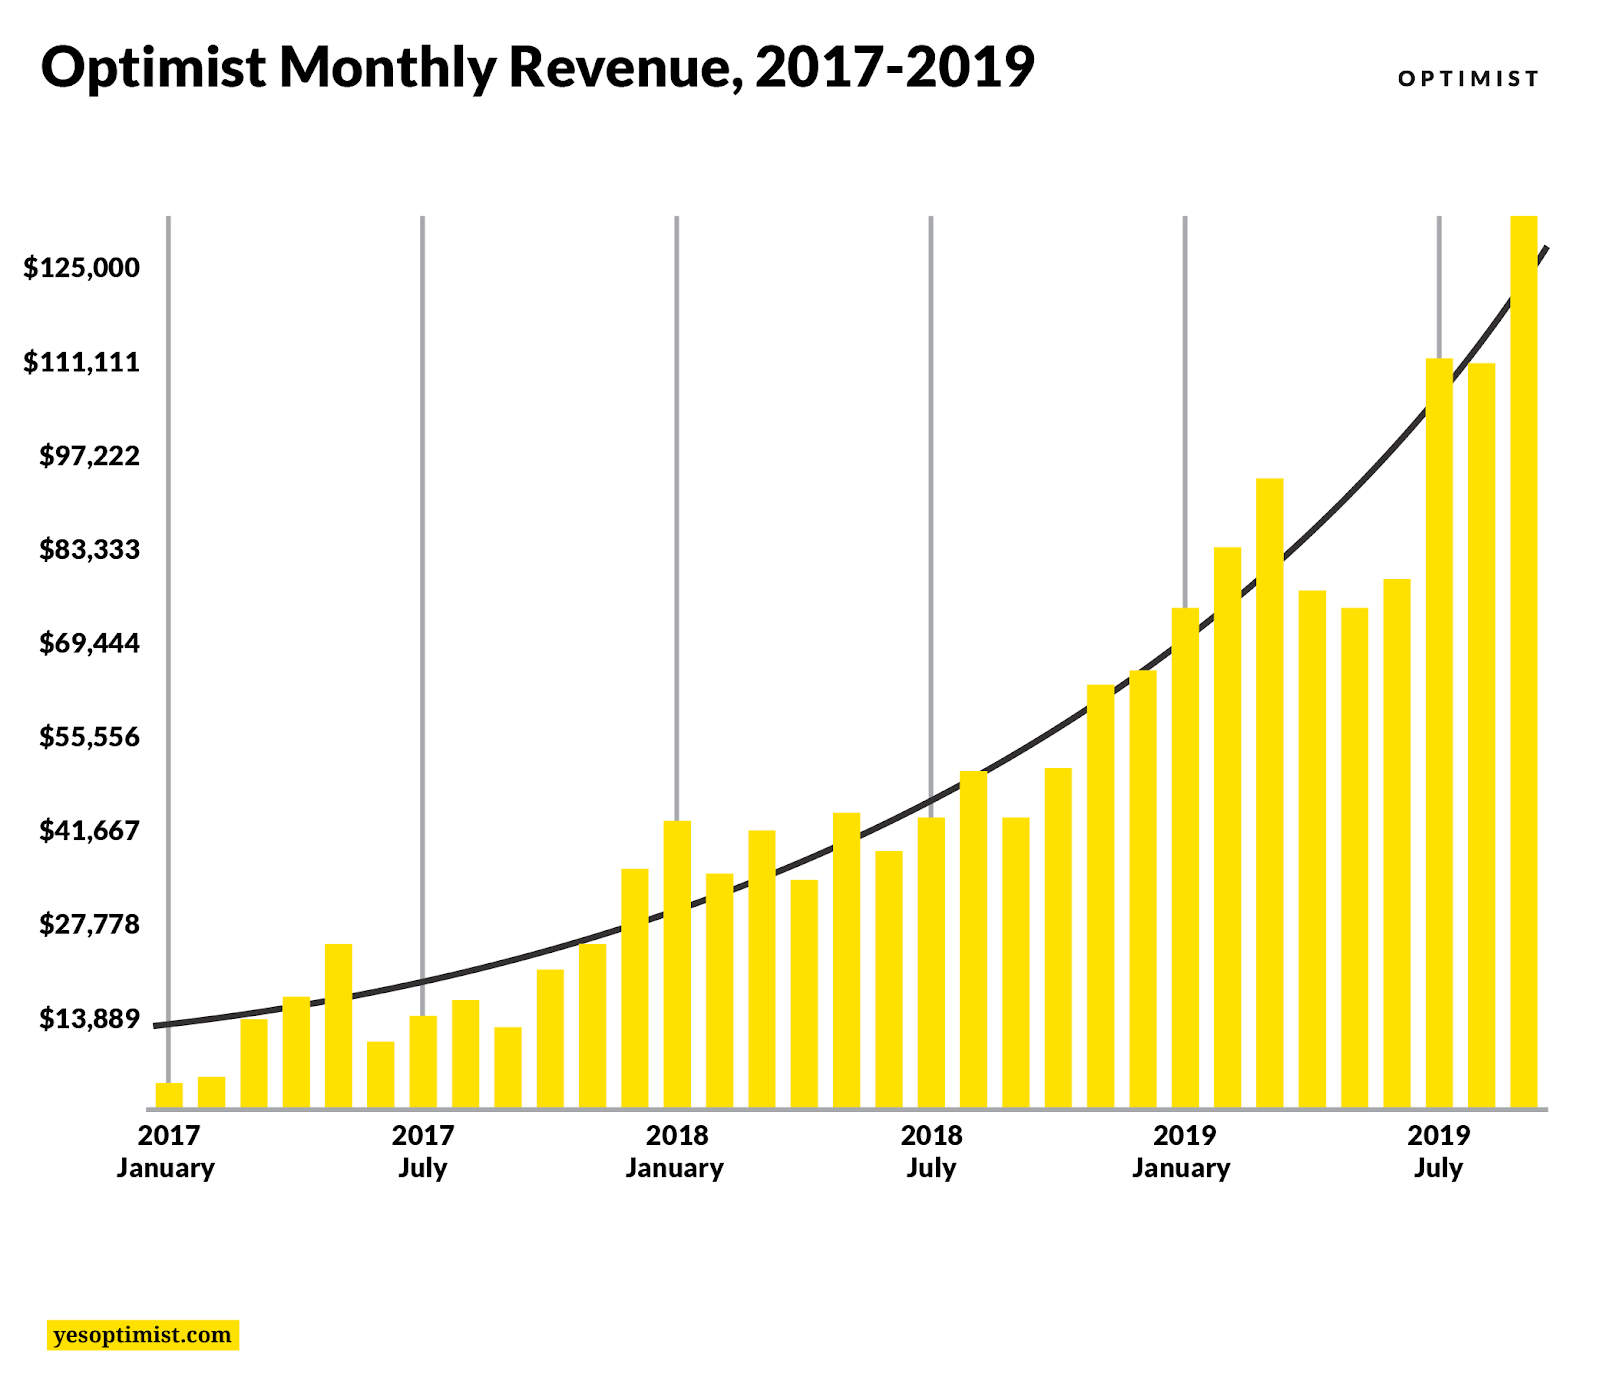 Optimist Monthly Revenue Chat, 2017-2019 by yesoptimist.com